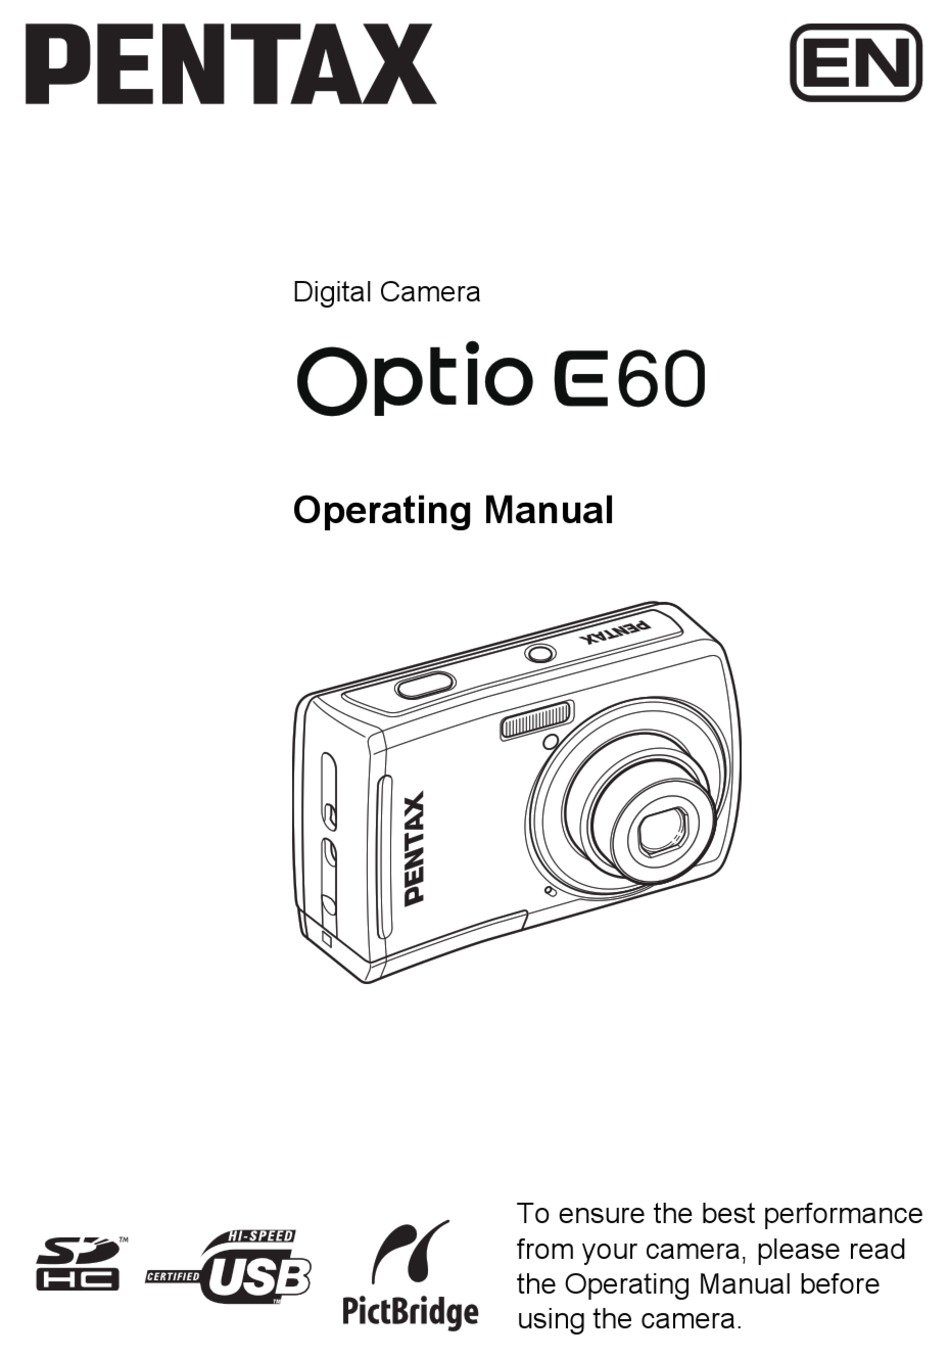 PENTAX OPTIO E60 OPERATING MANUAL Pdf Download | ManualsLib